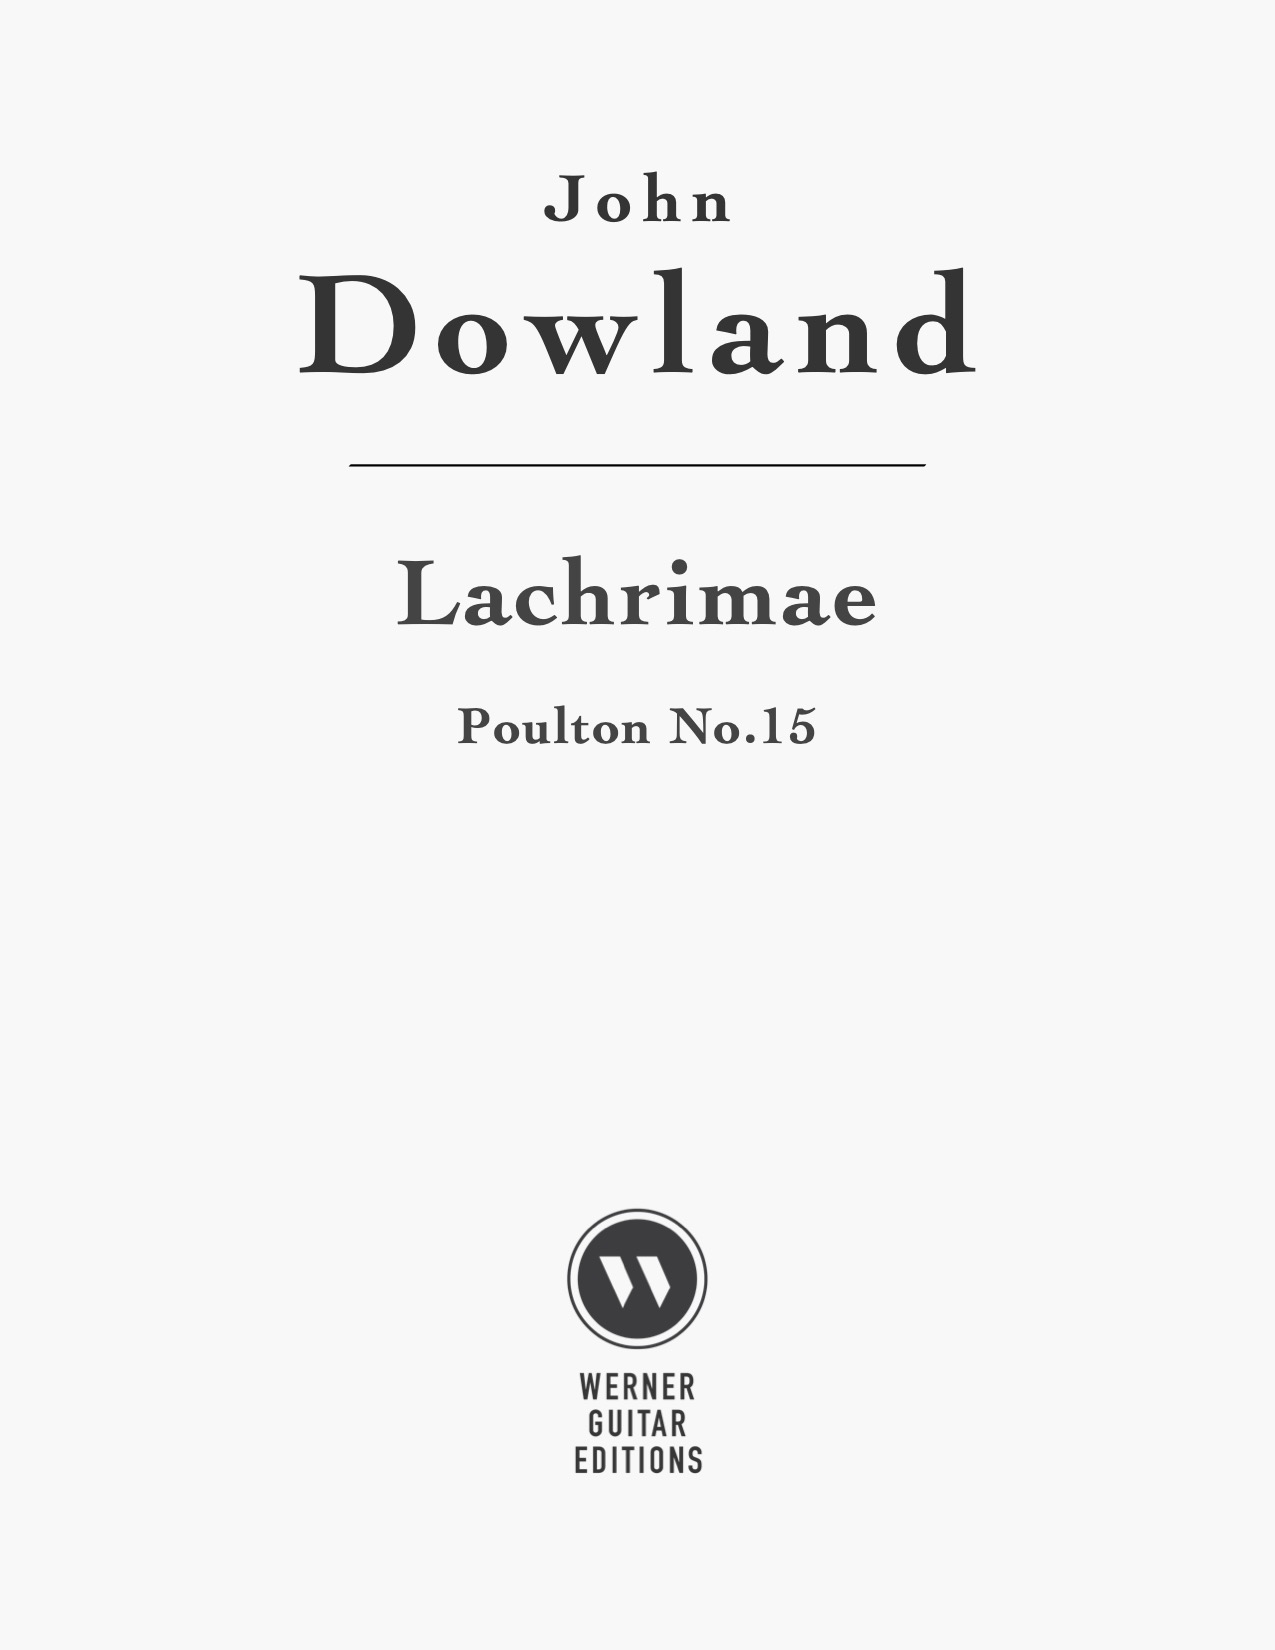 Lachrimae by John Dowland (PDF Sheet Music)